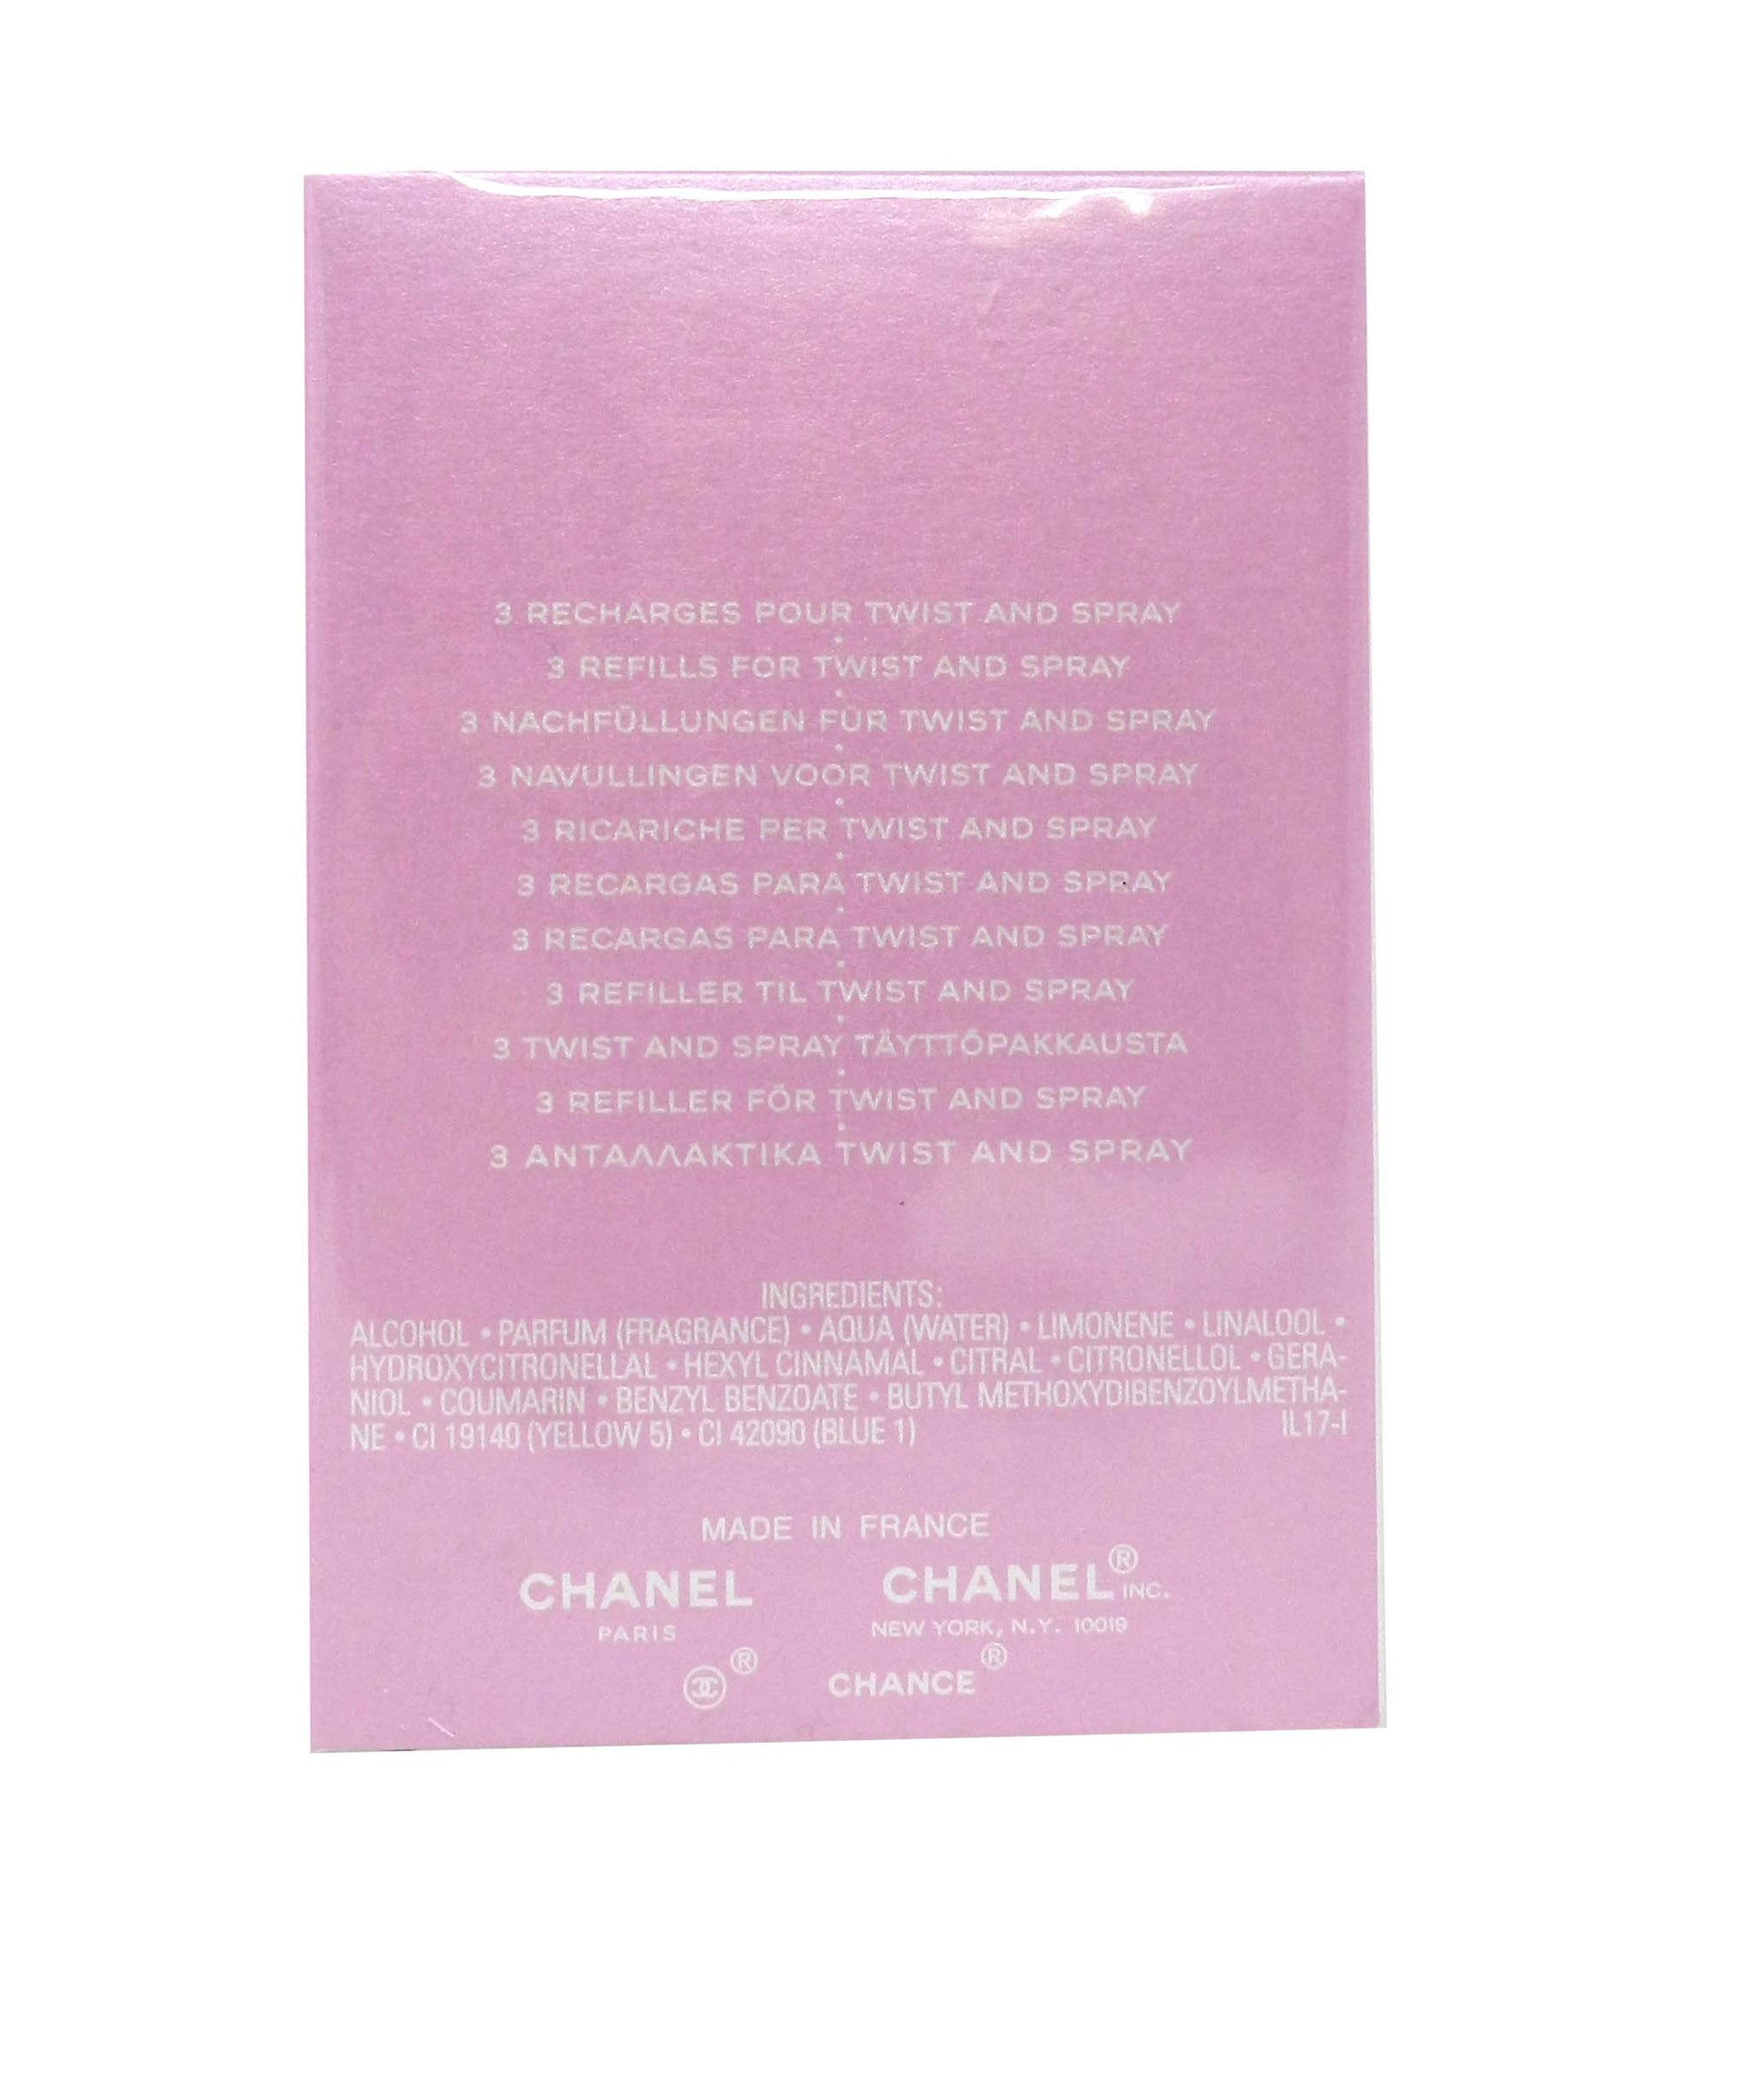 Chanel Chance Eau Tendre Eau de Toilette Travel Spray 20ml + 2 X